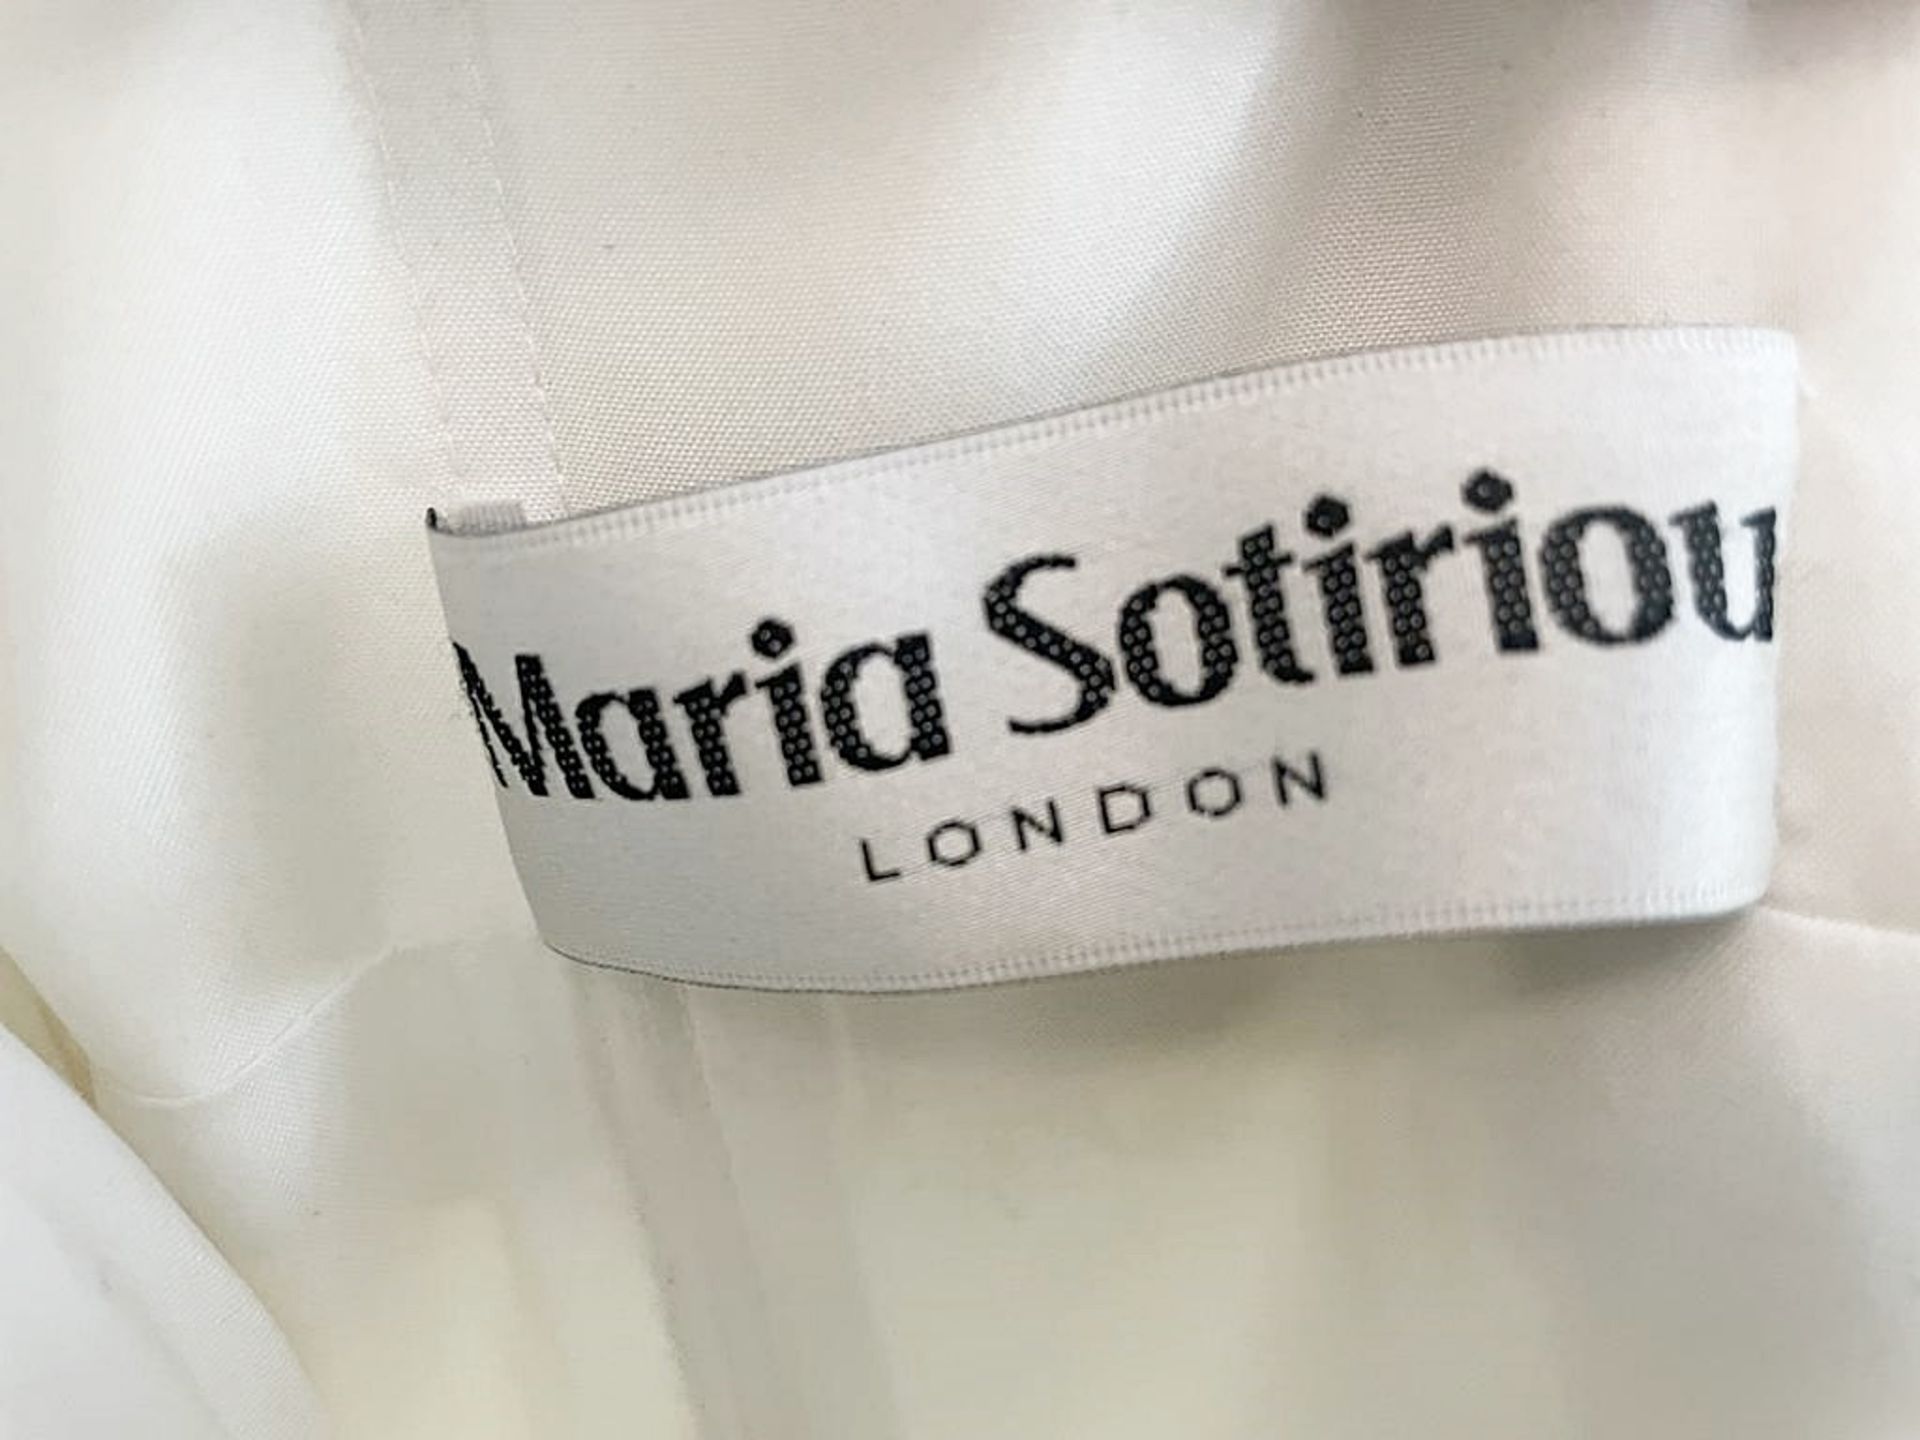 1 x MARIA SOTIRIOU 'Hyri' Stunning Silk Strapless Designer Wedding Dress Bridal Gown In Lace - - Image 11 of 12